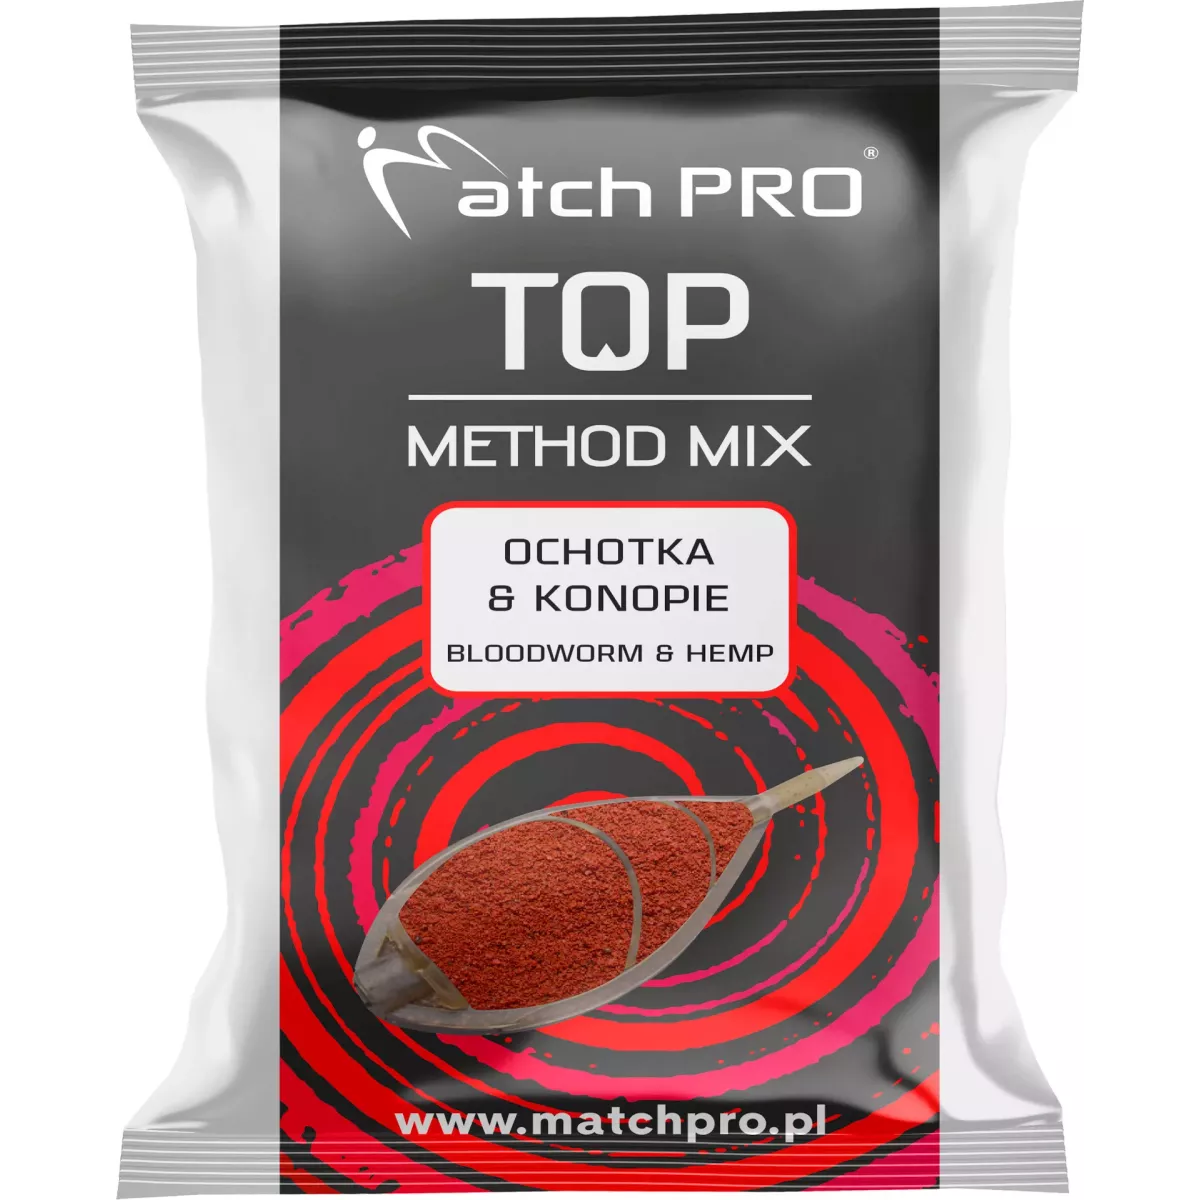 Zanęta MatchPro Method Mix TOP 700g - OCHOTKA & KONOPIE